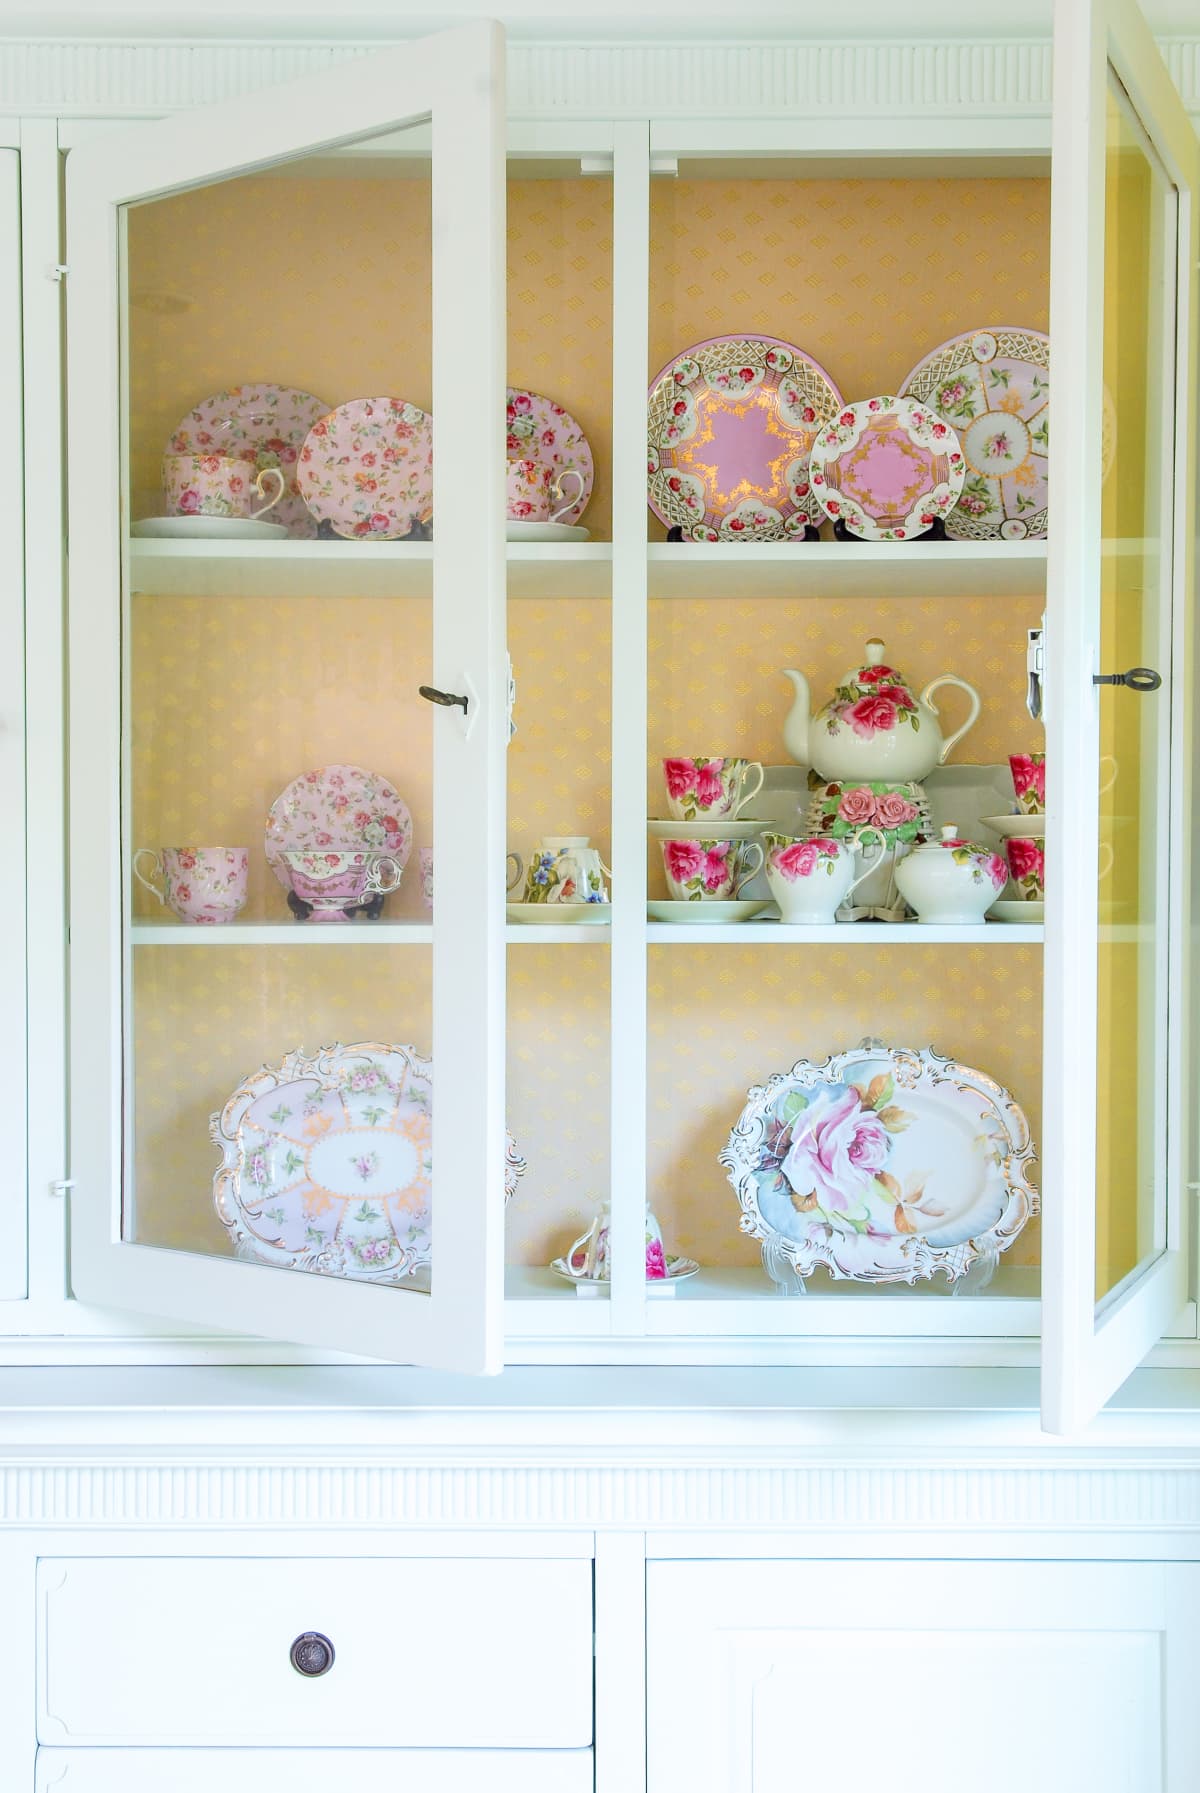 Colorful bowls on a vintage kitchen shelf